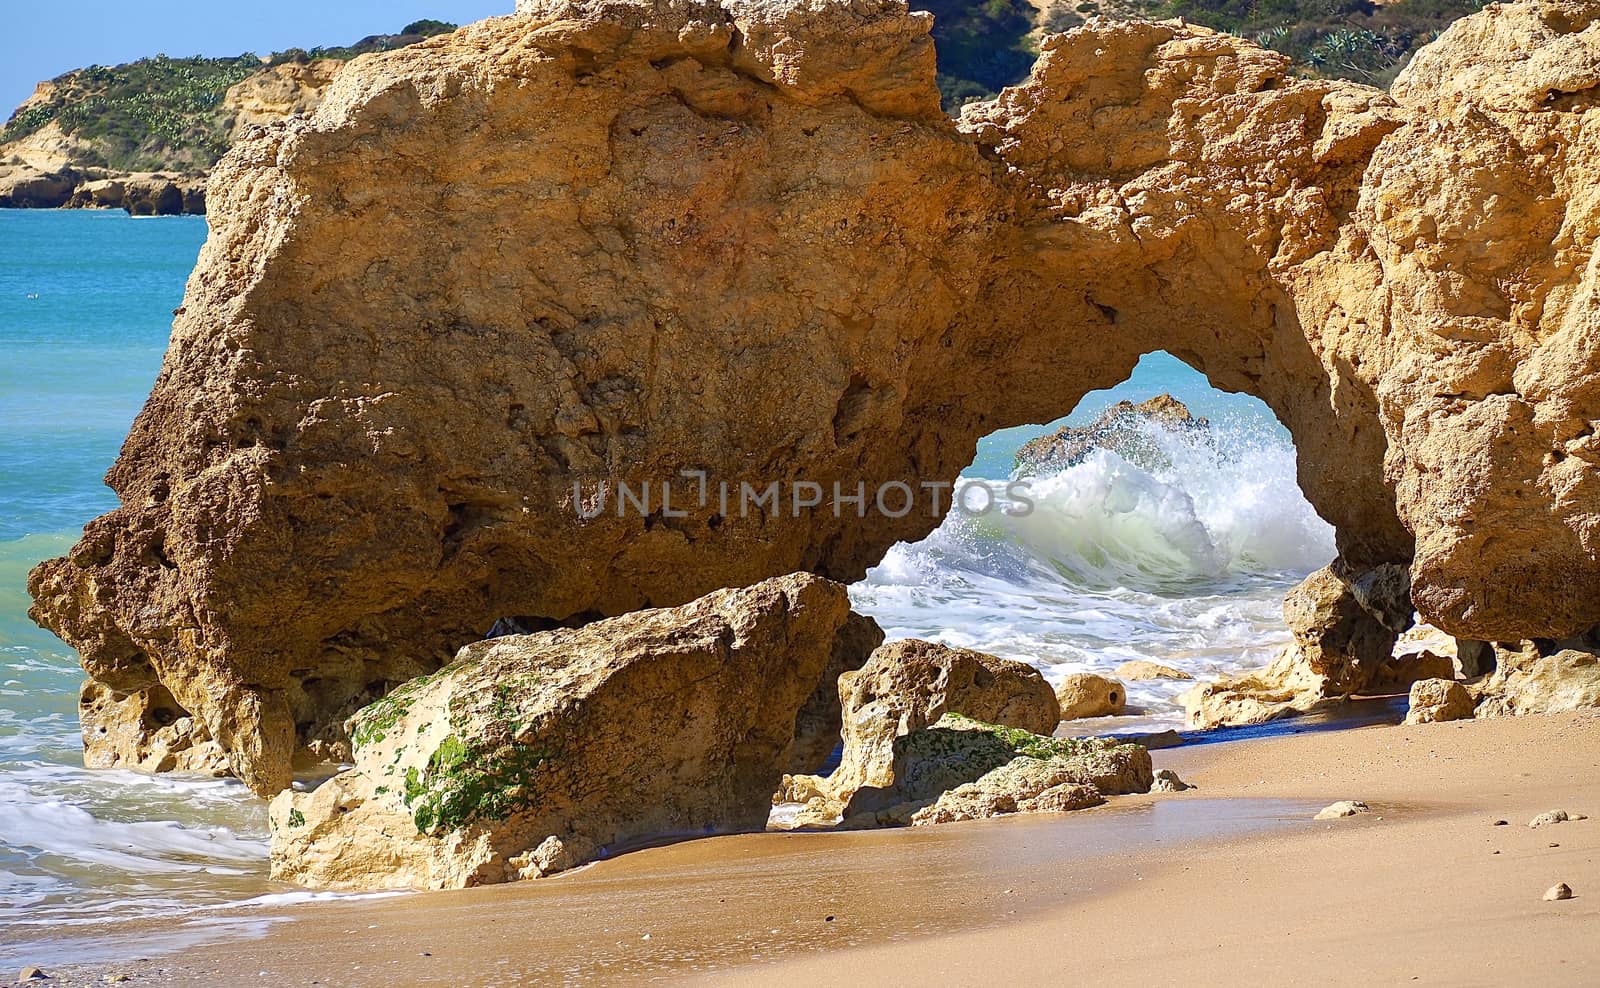 Red cliffs in blue ocean at the coast of Albufeira in Portugal by Stimmungsbilder